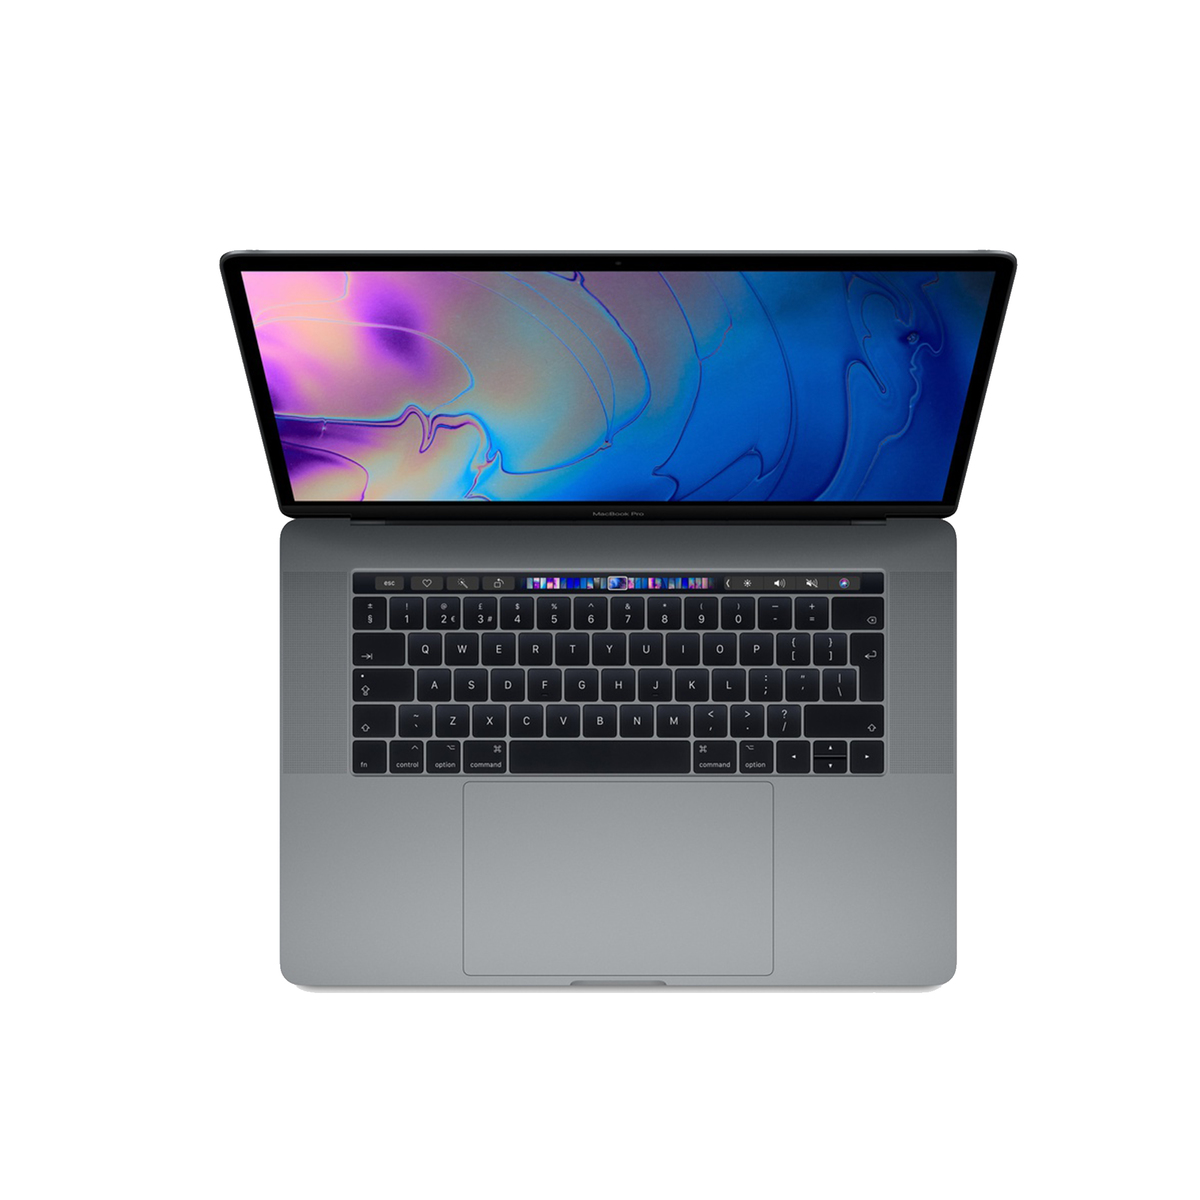 MacBook Pro Touch Bar With 15.4-Inch Retina Display, Core i7 Processor/16GB RAM/256GB SSD/4GB Radeon Pro 555X Graphics Card/Space Gray(MV902B/A)